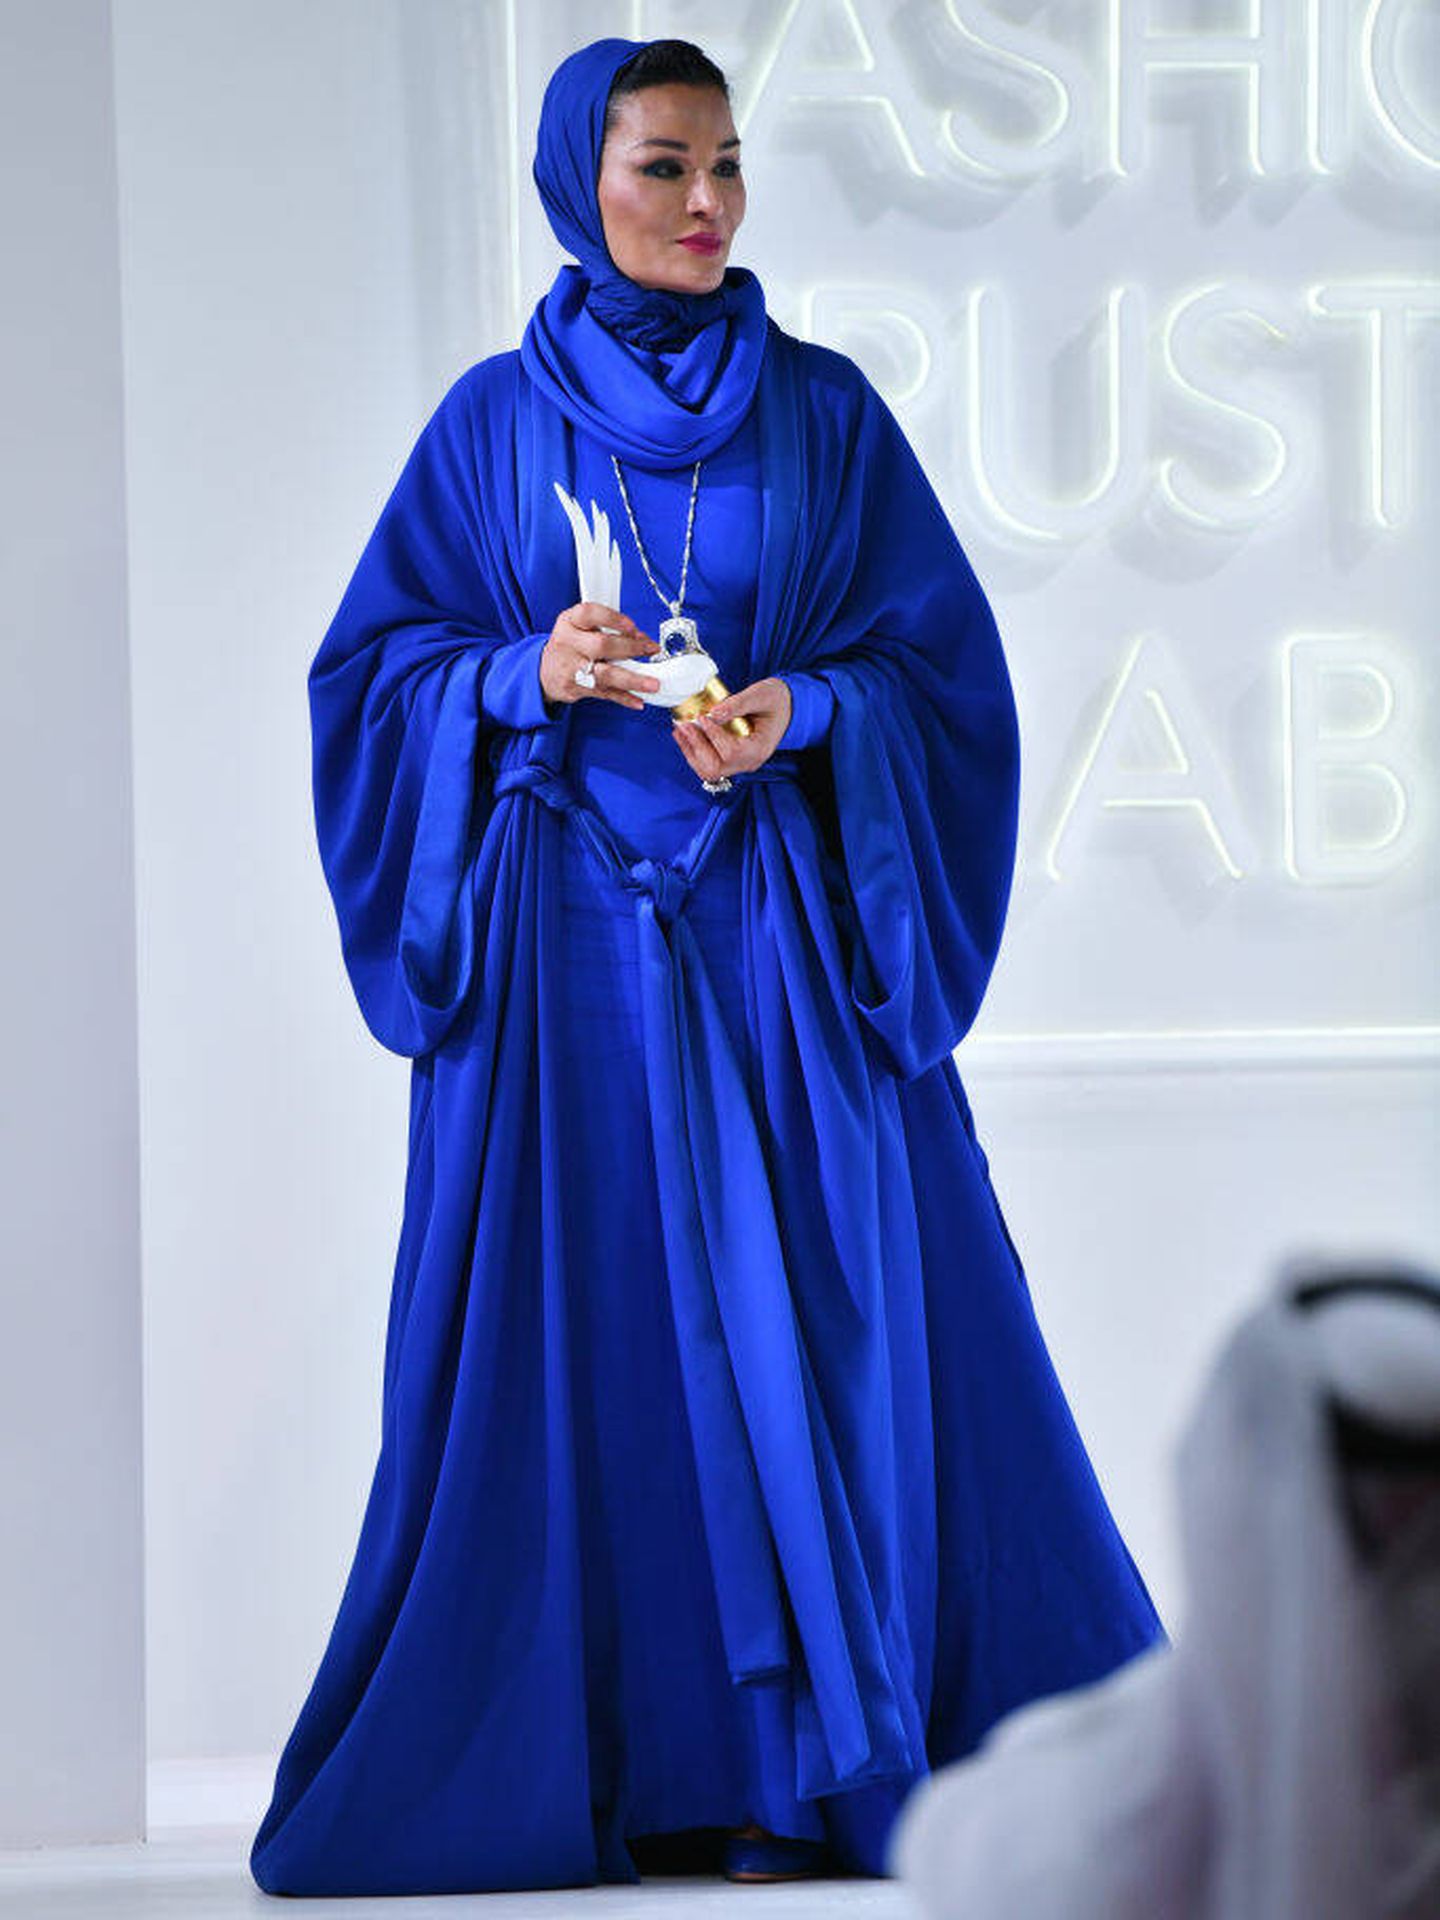 Sheika Moza durante los Fashion Trust Arabia Awards 2021. (Getty Images)